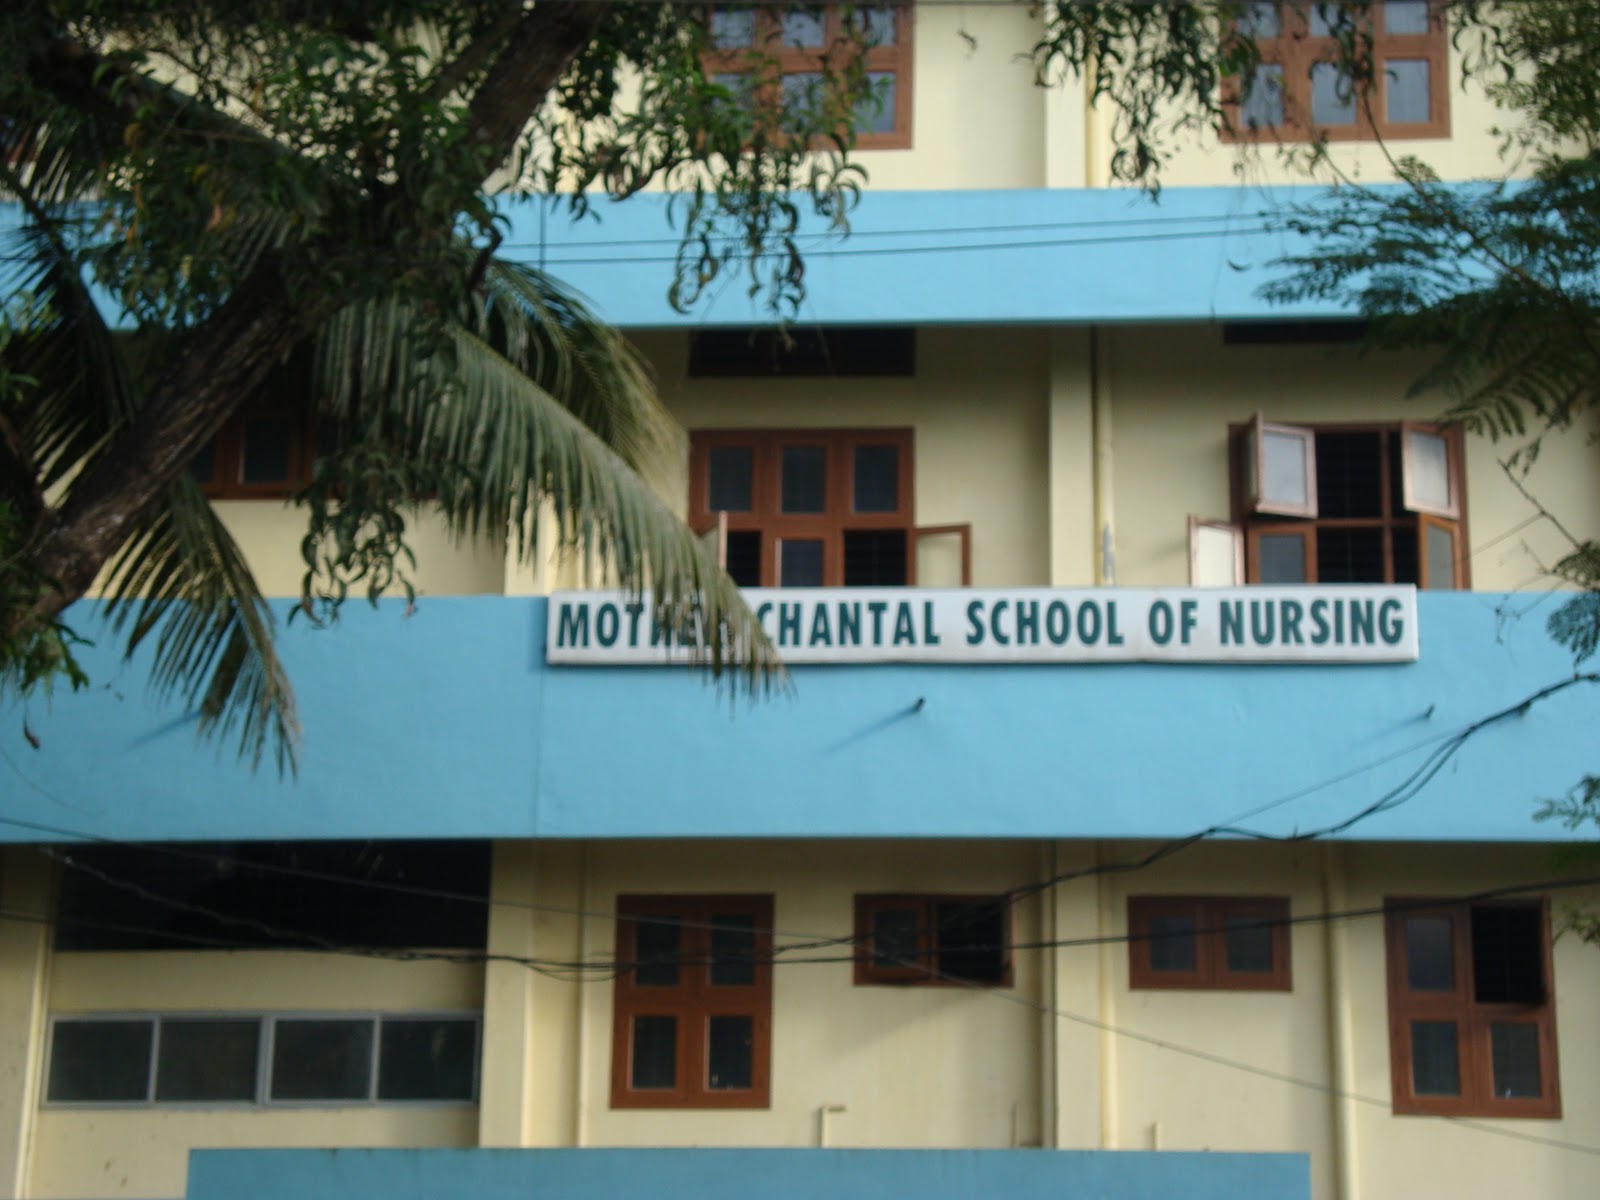 Mother Chantal School of Nursing